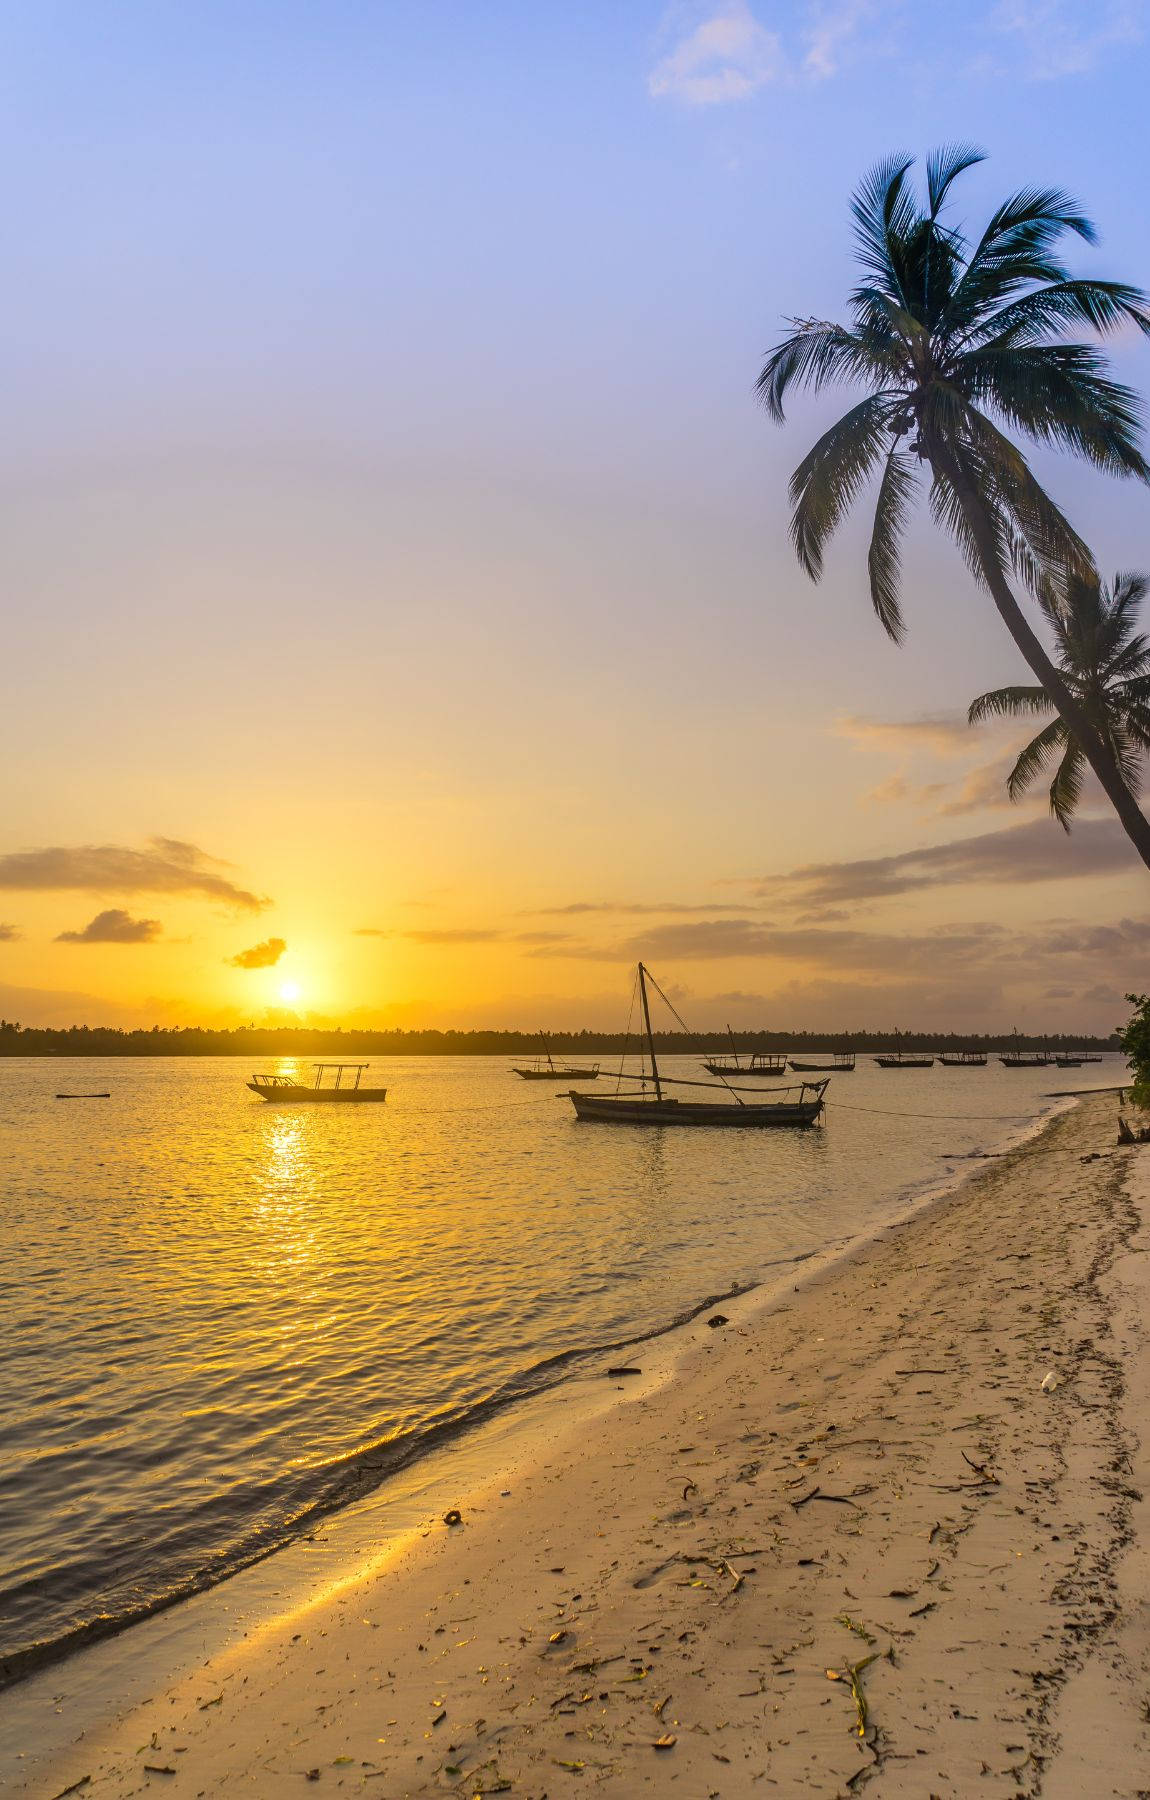 Bootesegeln Bei Sonnenaufgang An Einem Tropischen Strand. Wallpaper